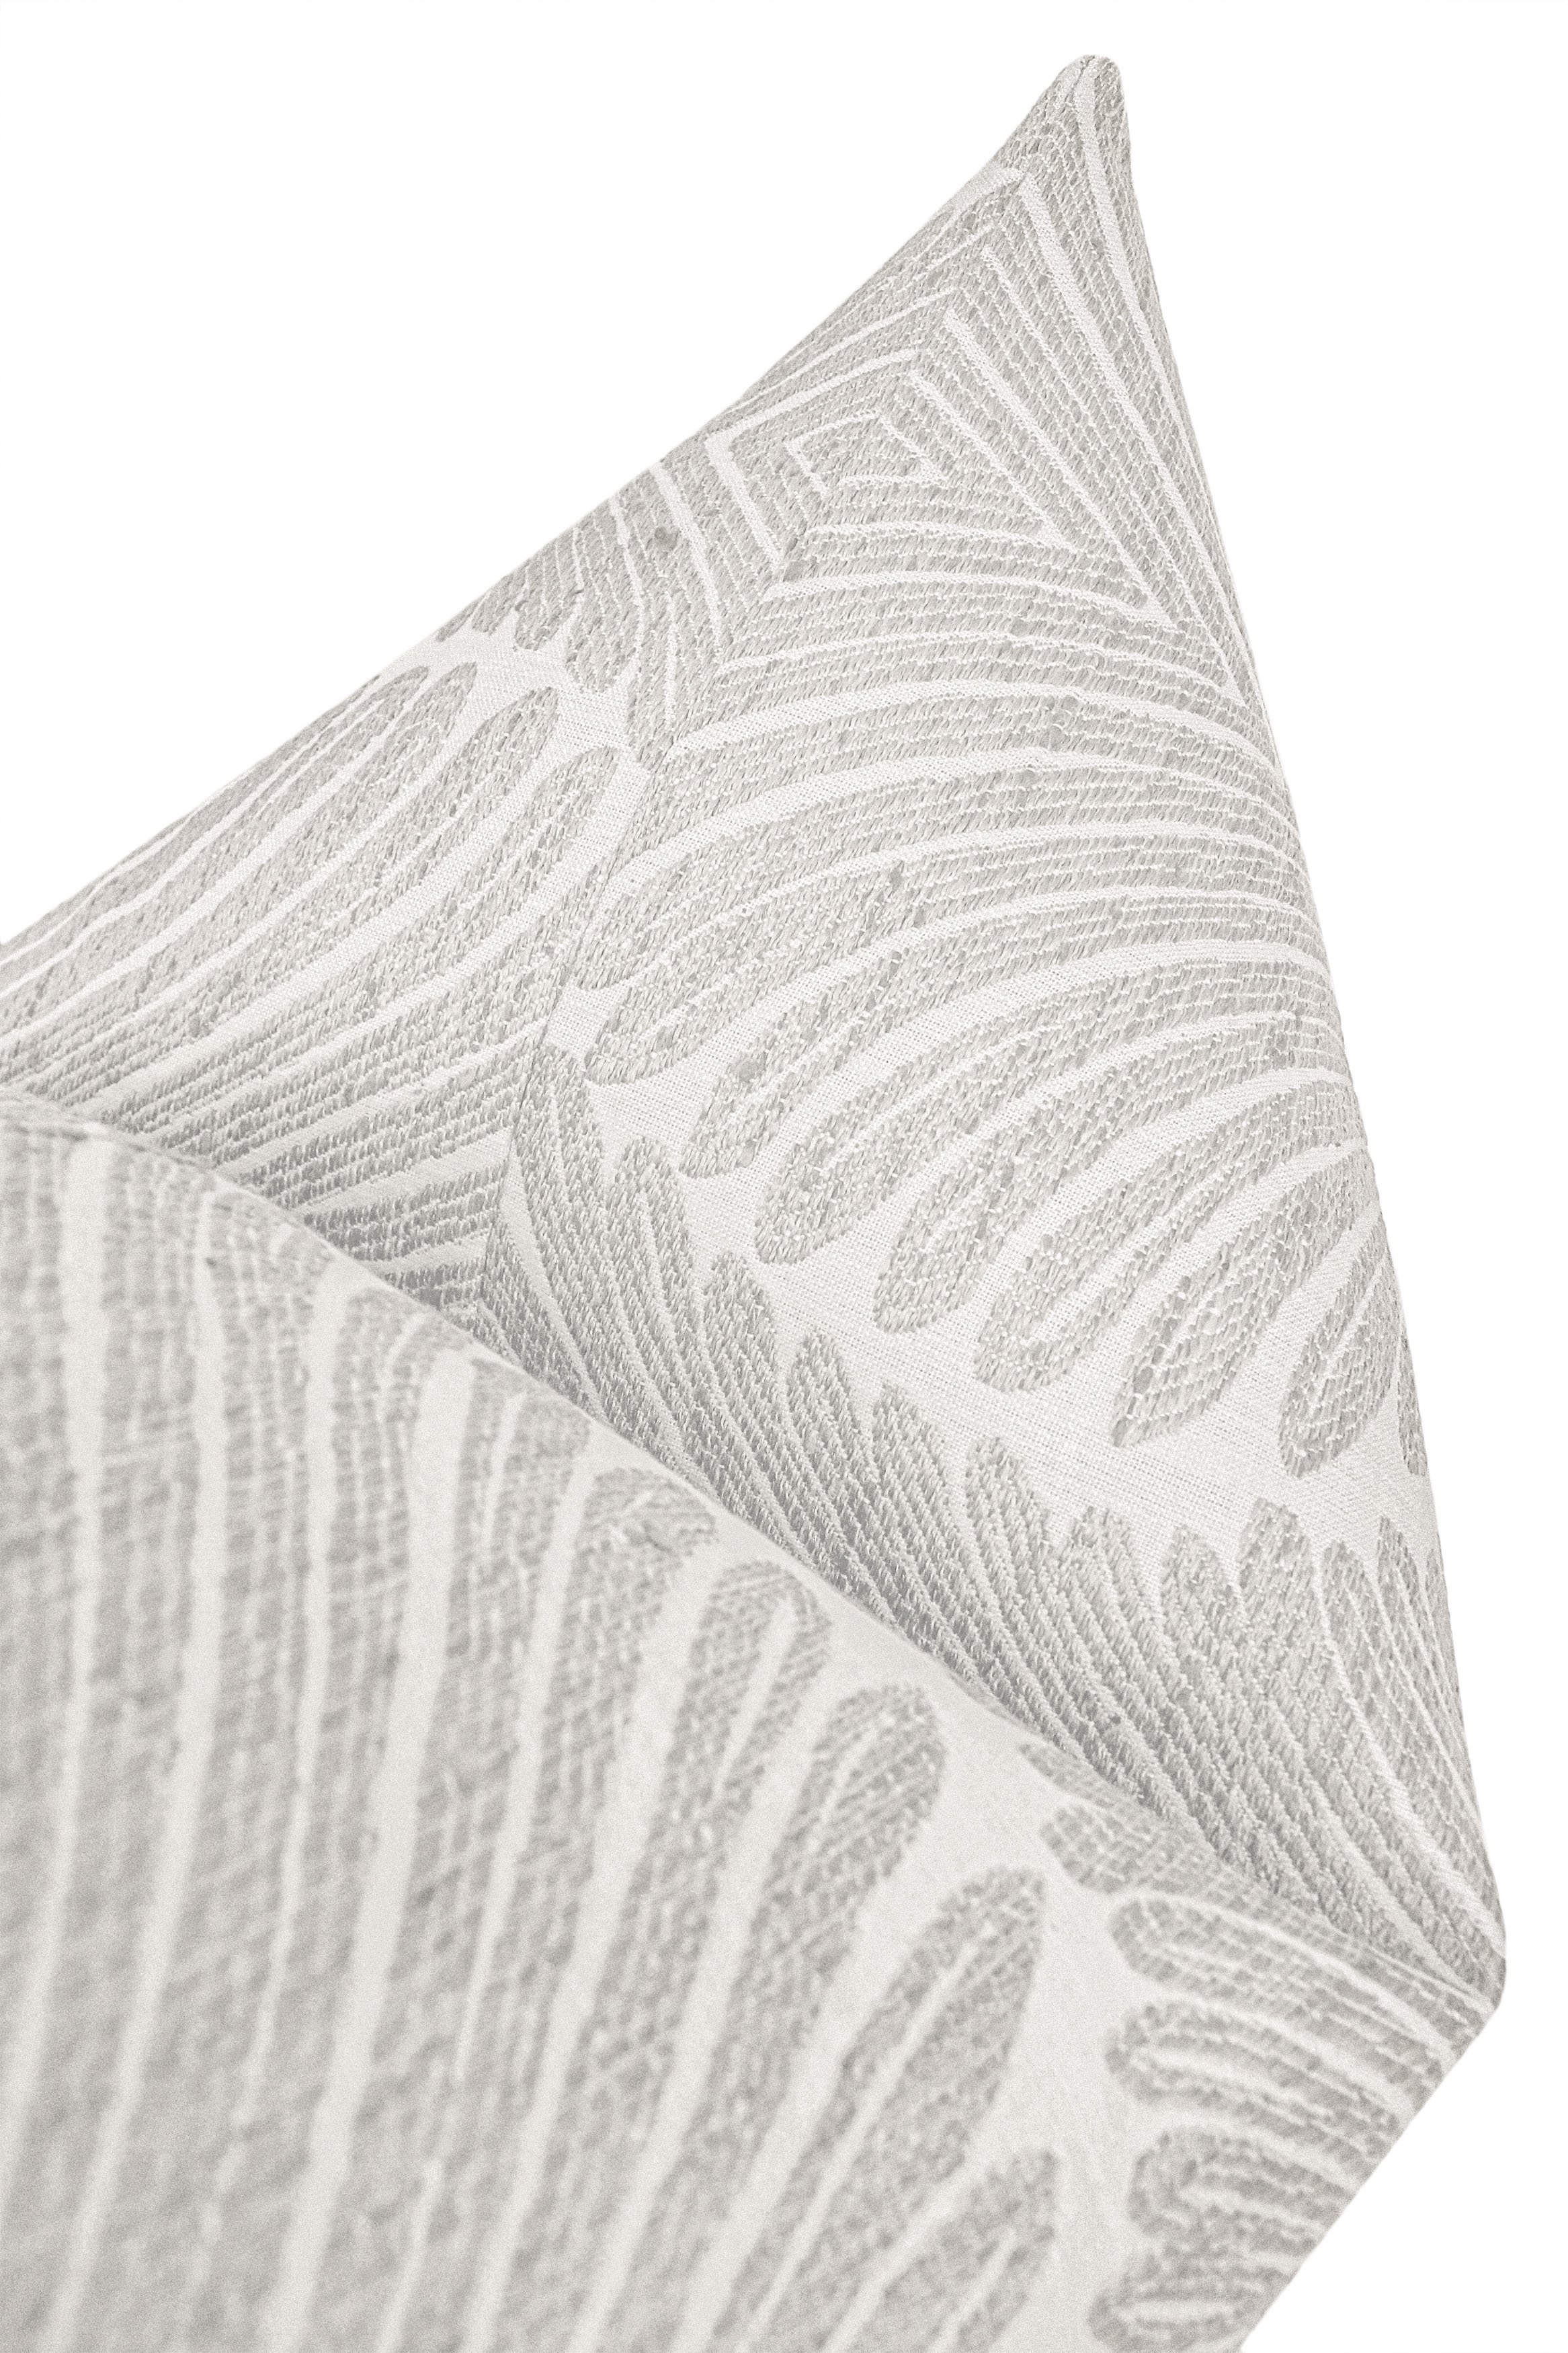 Musgrove Chenille Throw Pillow Cover, Dove Gray, 20" x 20" - Image 1